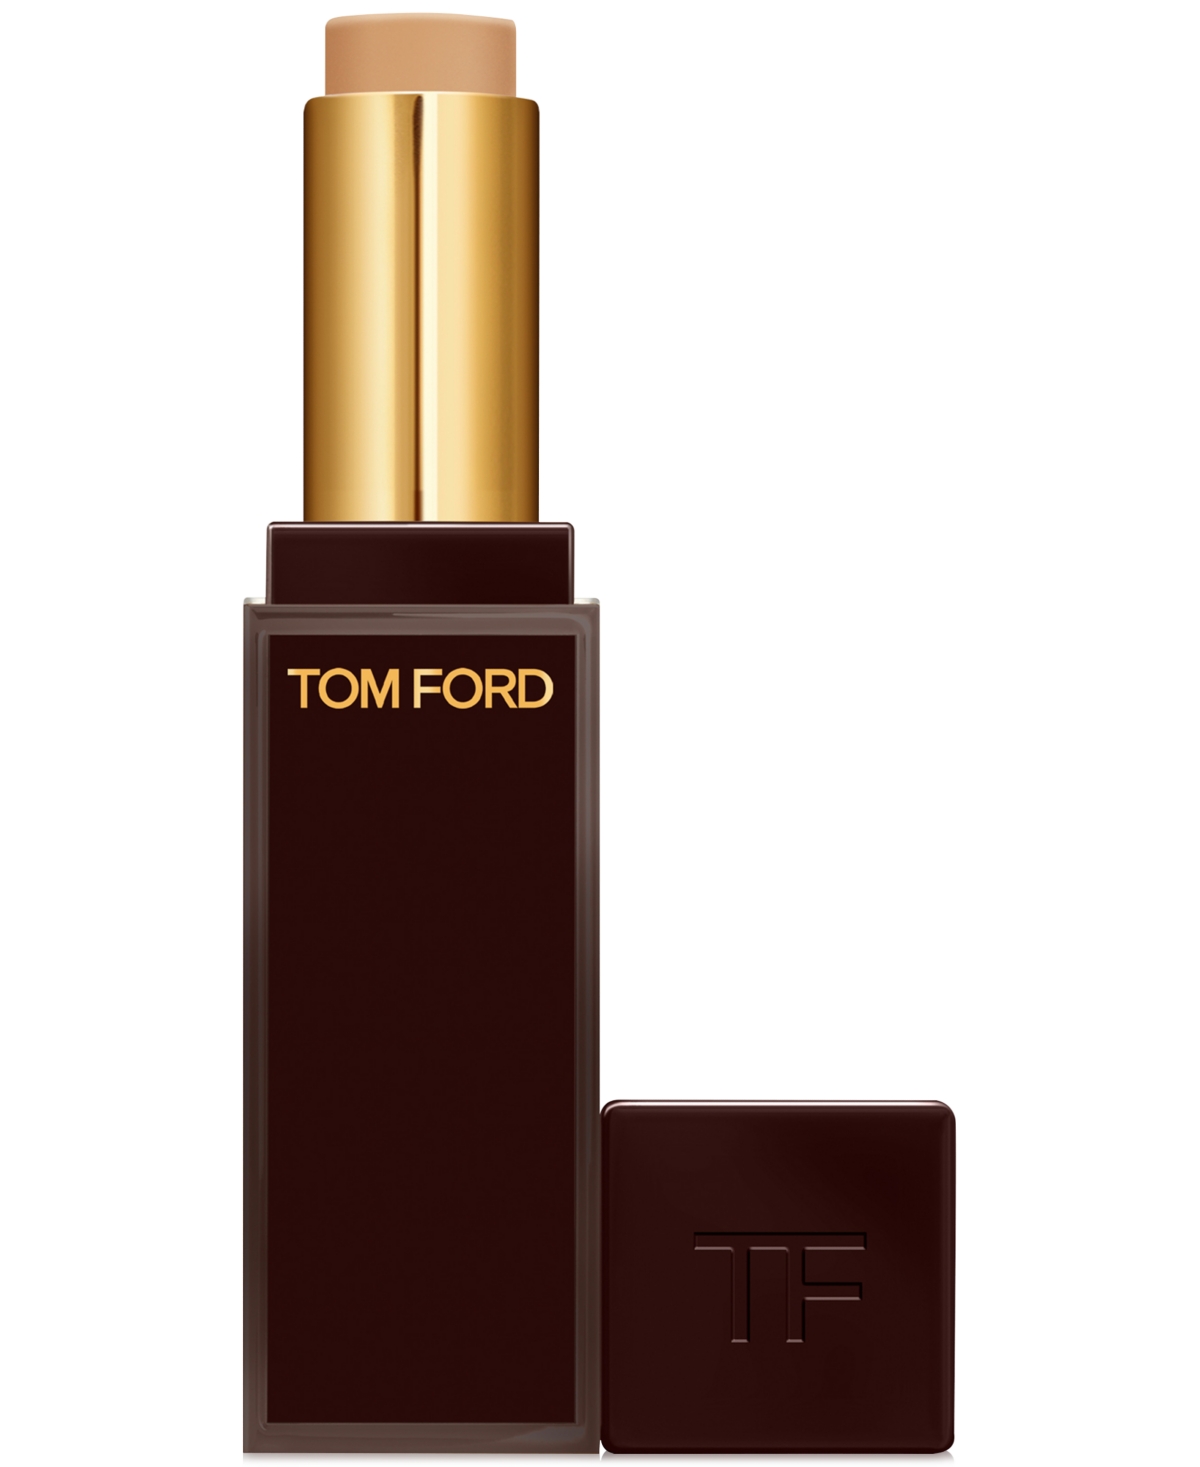 Tom Ford Traceless Soft Matte Concealer In W Sand (medium-tan Skin With Golden Unde